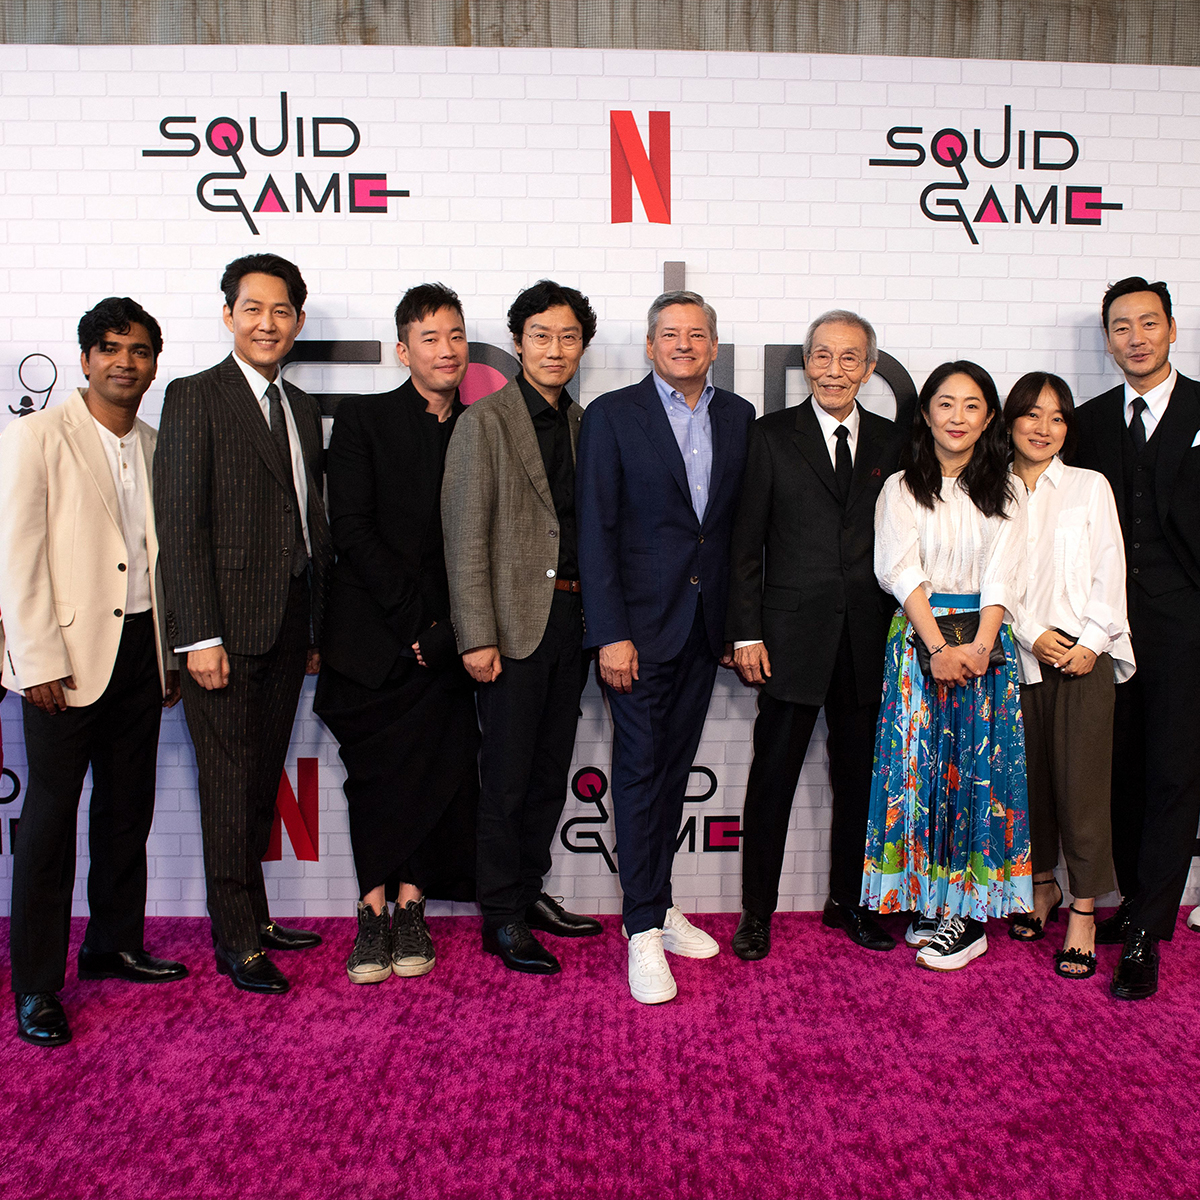 Squid Game' Season 2: Final Cast Unveiled - About Netflix